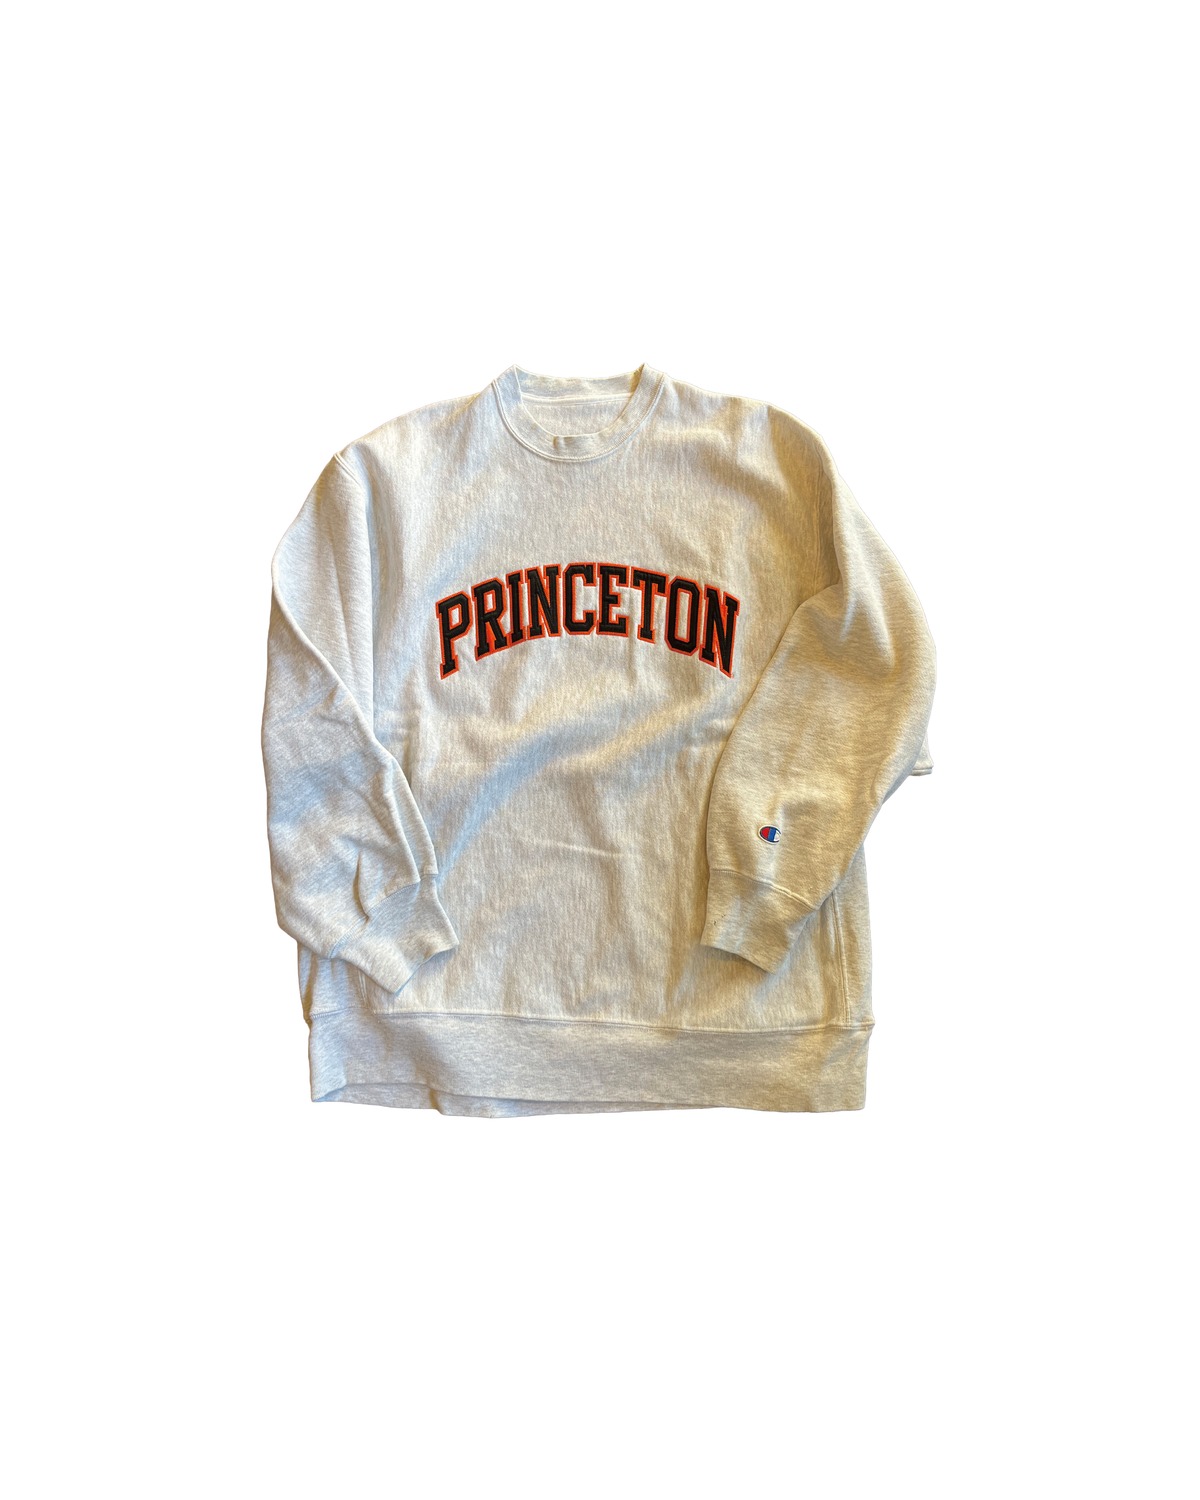 00's Champion Reverse Weave PRINCETON Patch Sweatshirt 復刻 ...